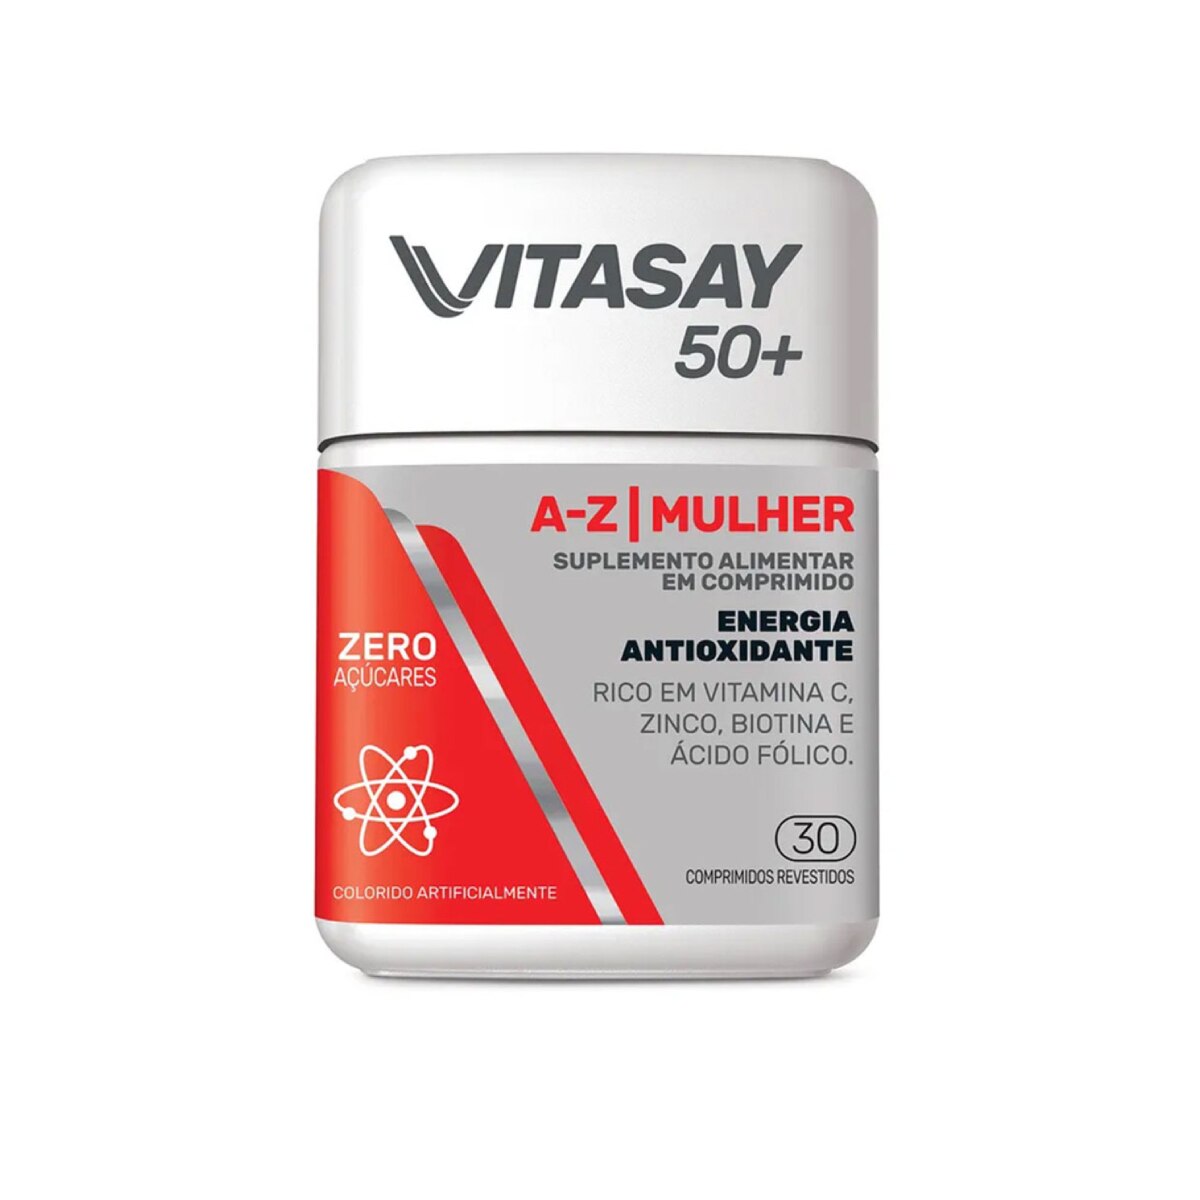 Vitasay 50+ A-Z Mulher 30 Comprimidos Revestidos